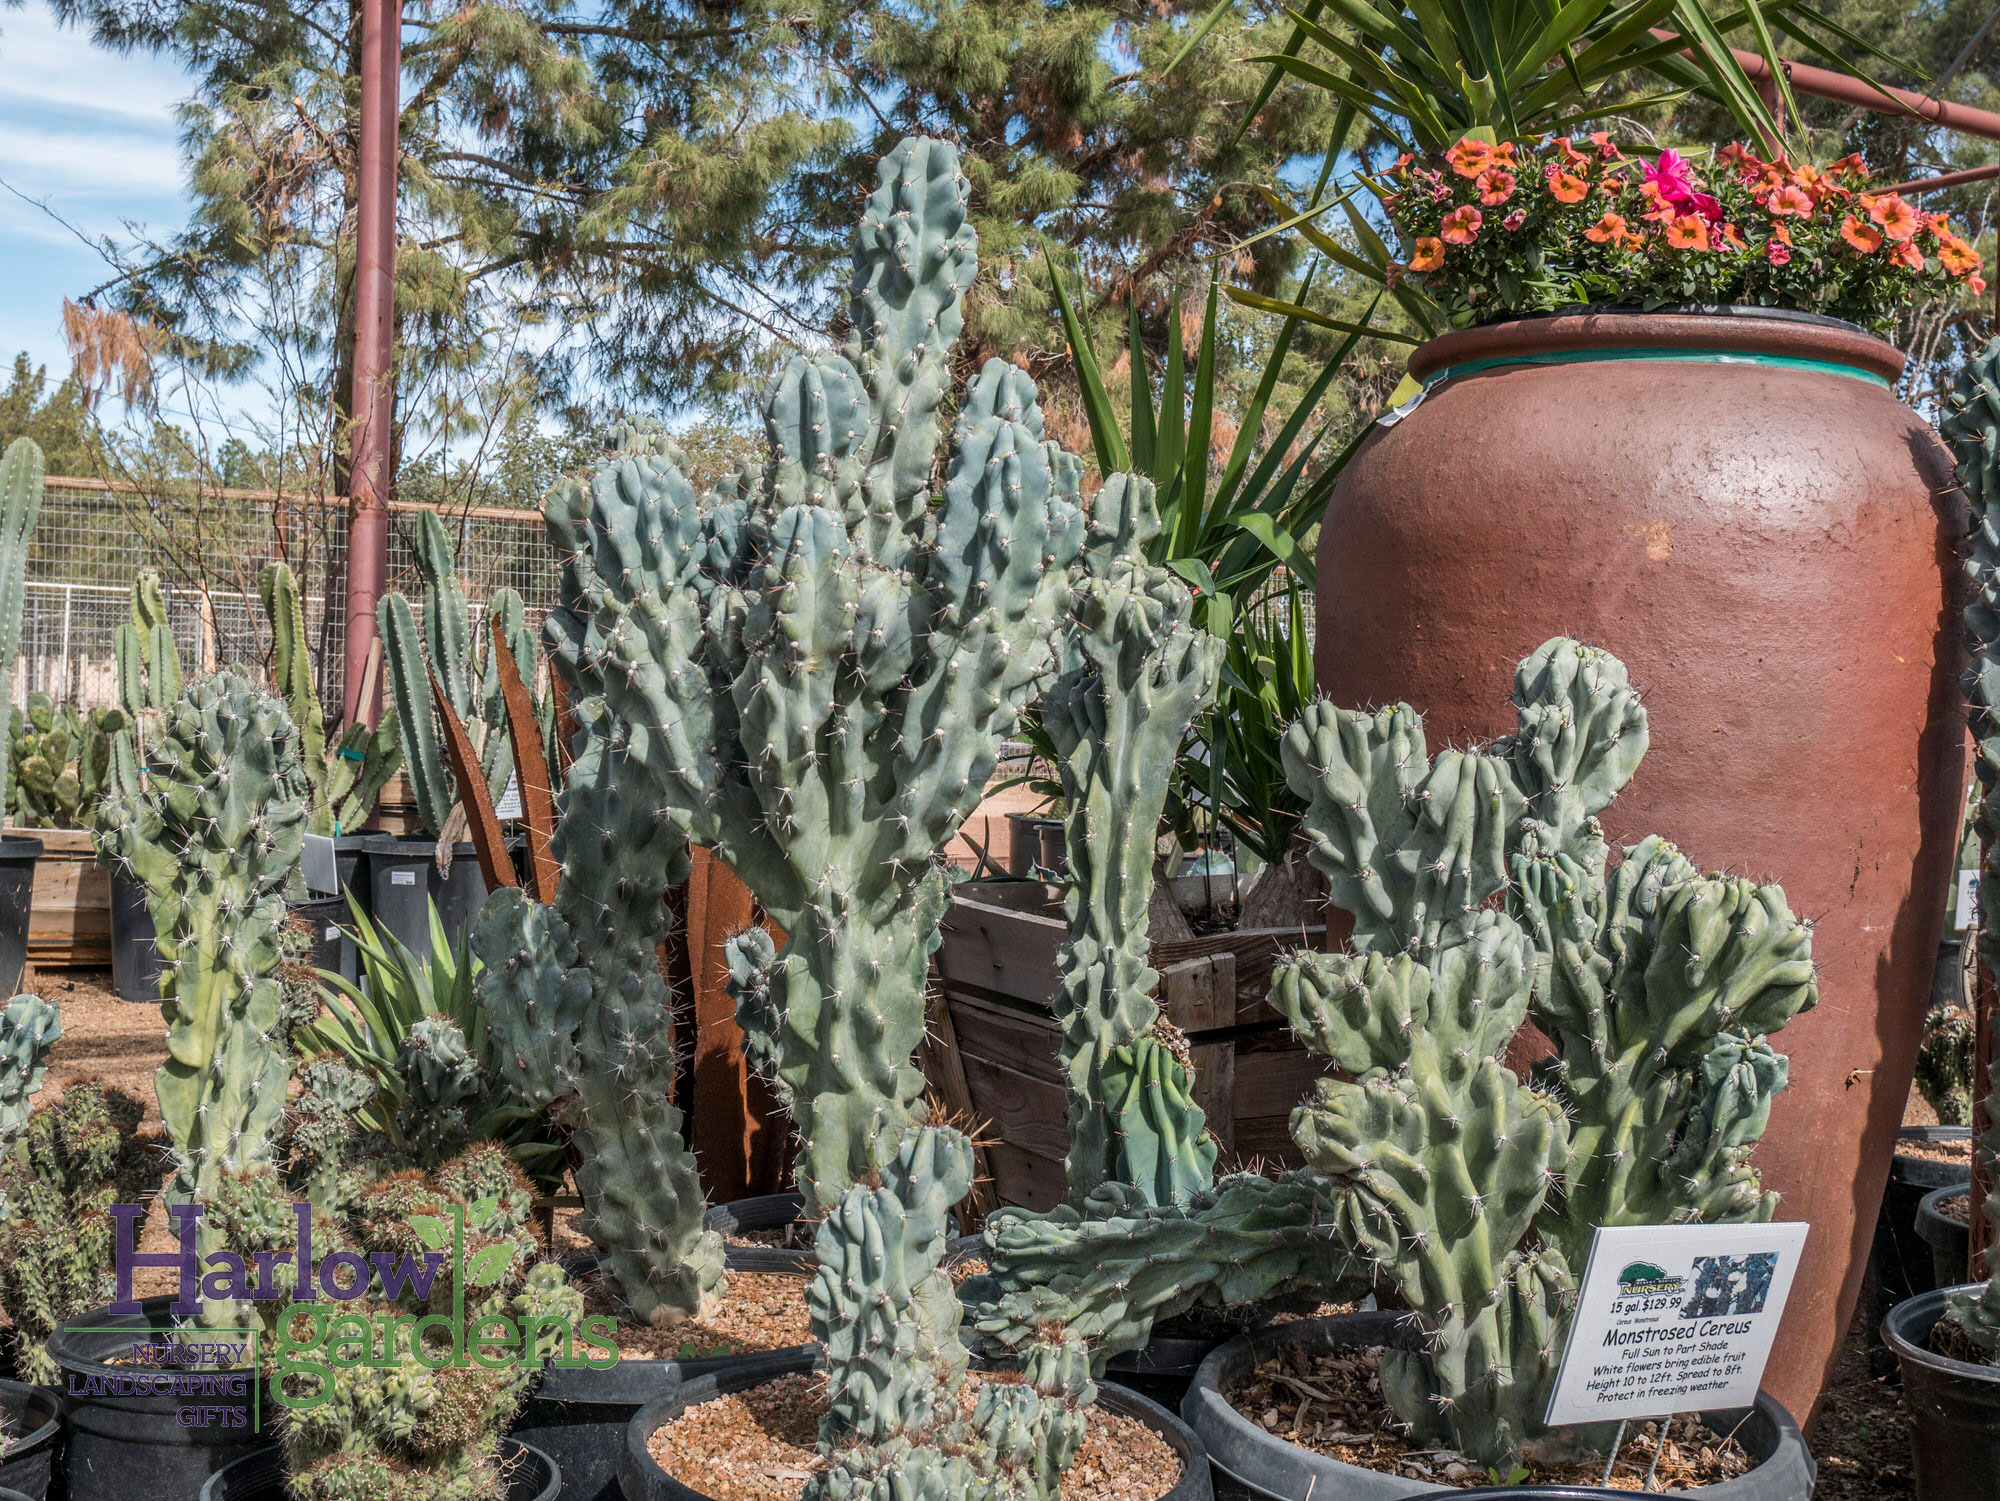 Monstrosed Cereus for sale at Harlow Gardens Tucson.